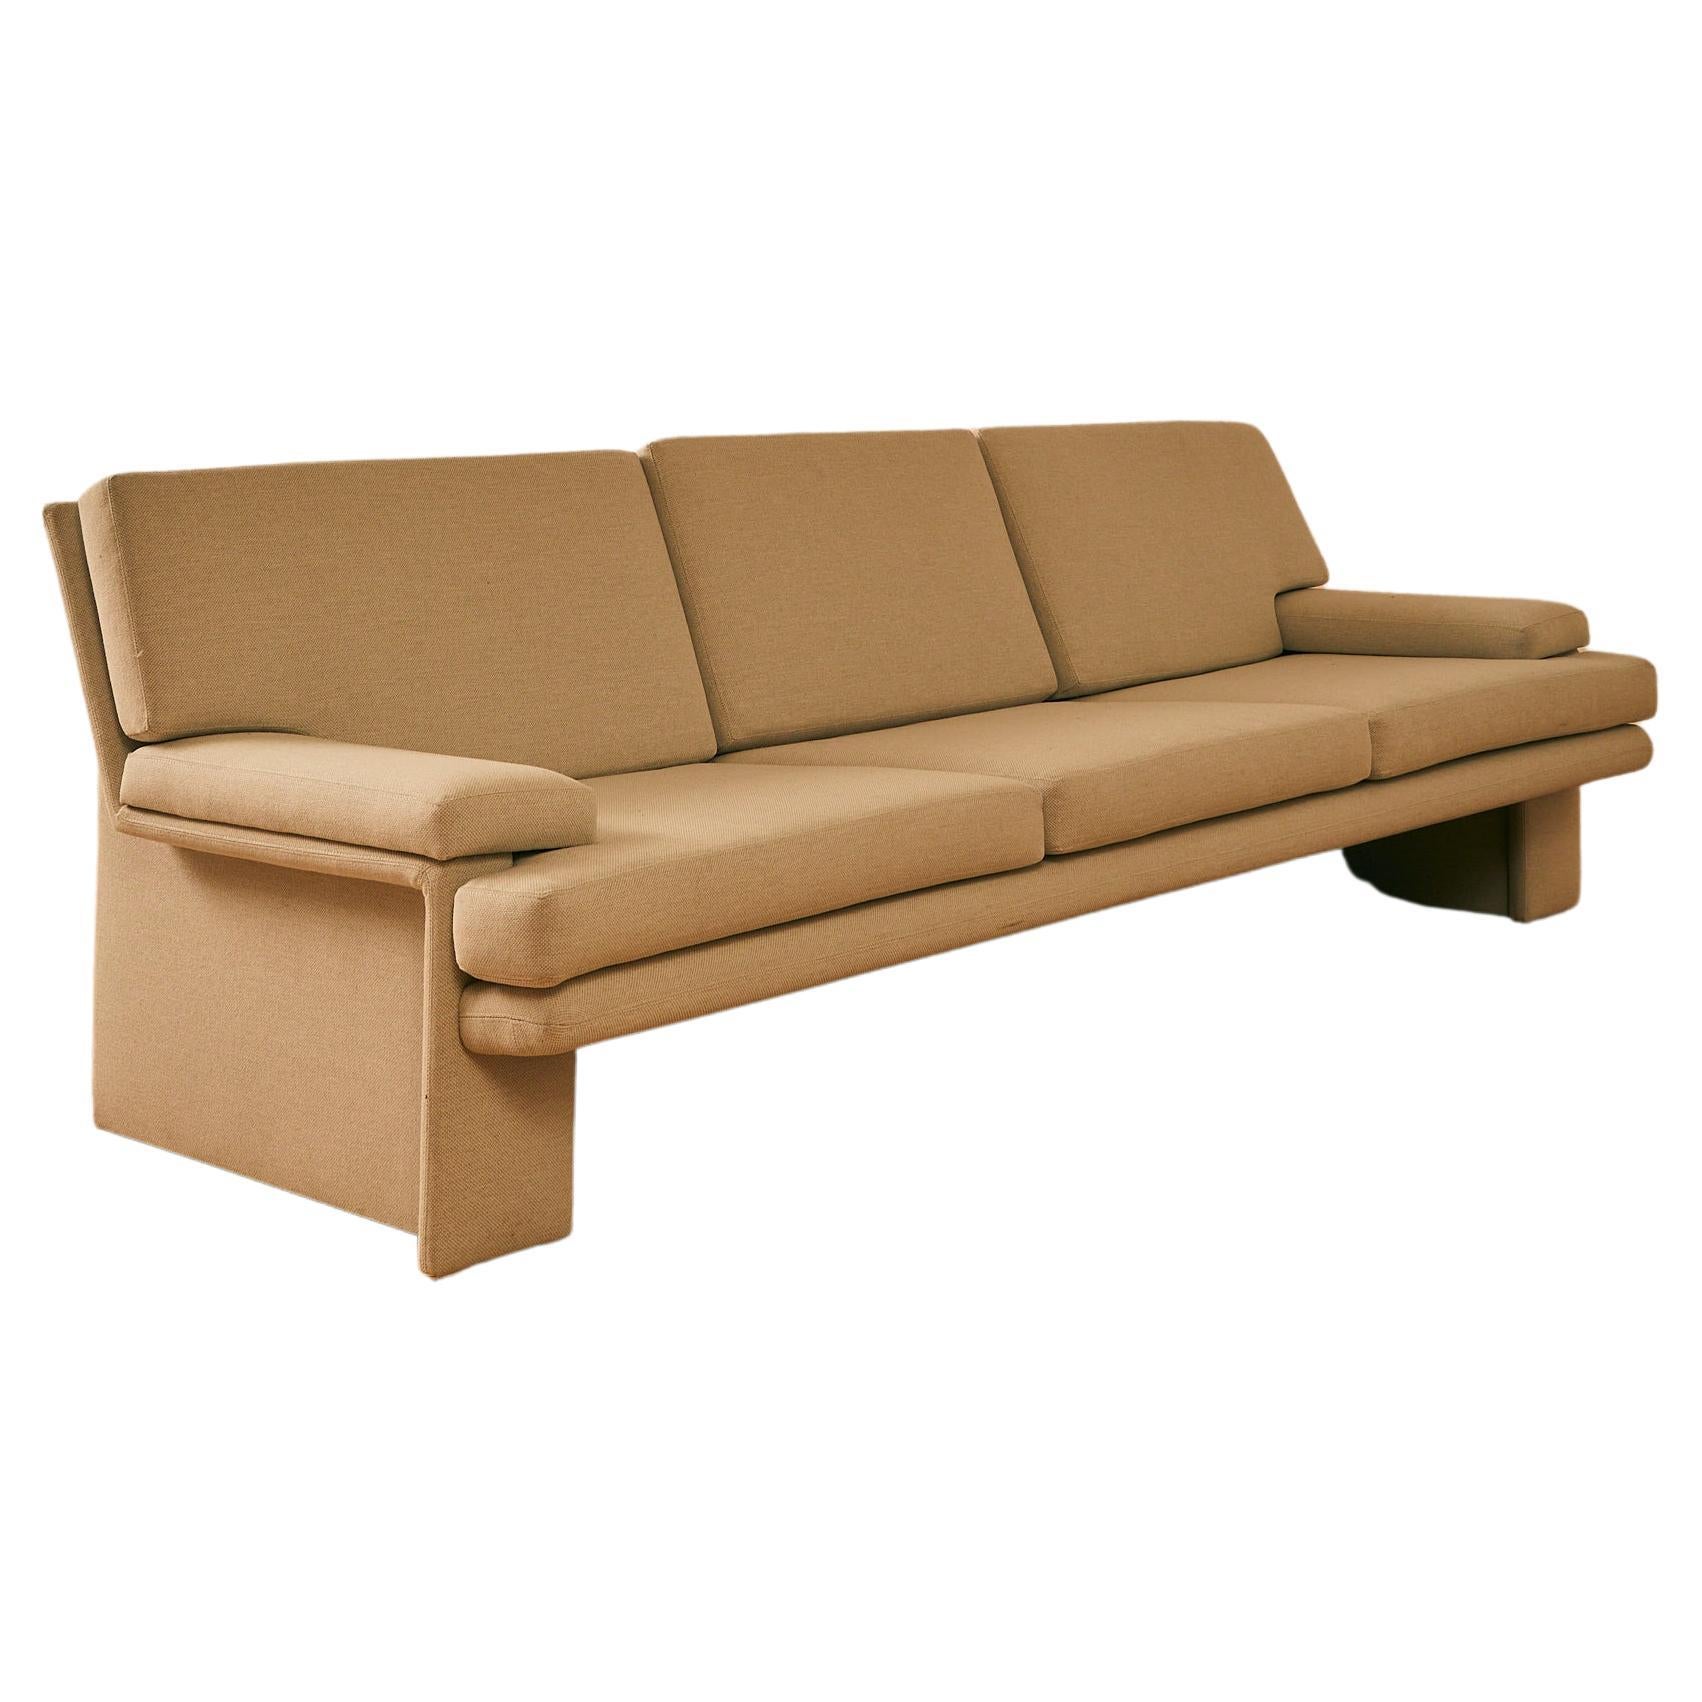 Rectangular Modernist Sofa For Sale